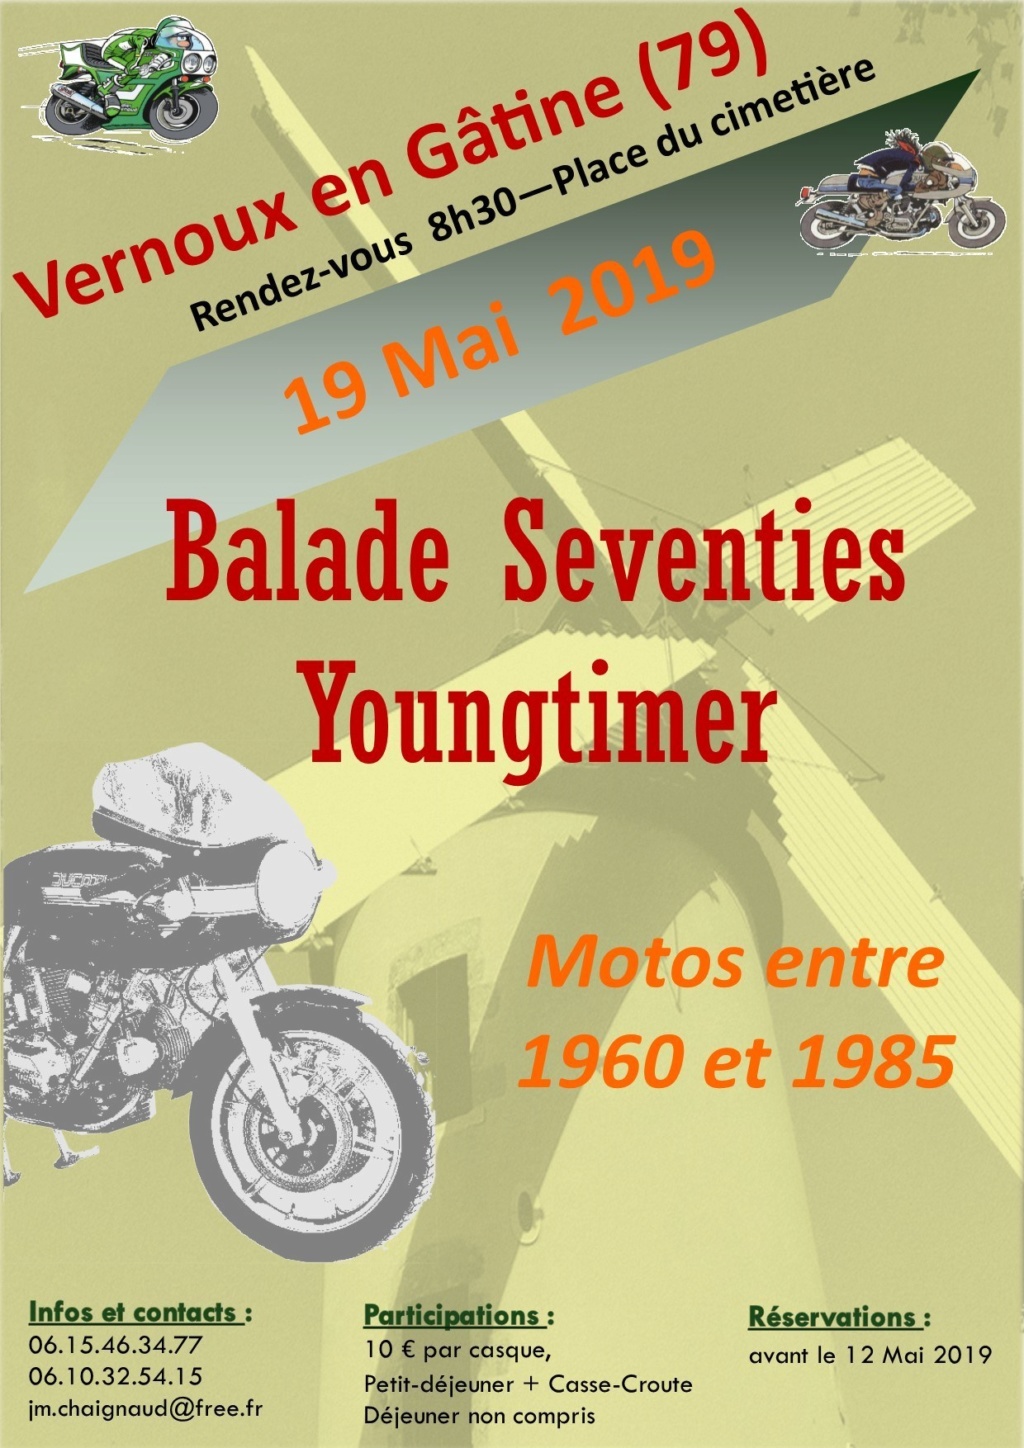 MANIFESTATION - Balade Seventies Youngtimer - 19  Mai 2019 - Vernoux en Gatine   ( 79)           Affich38